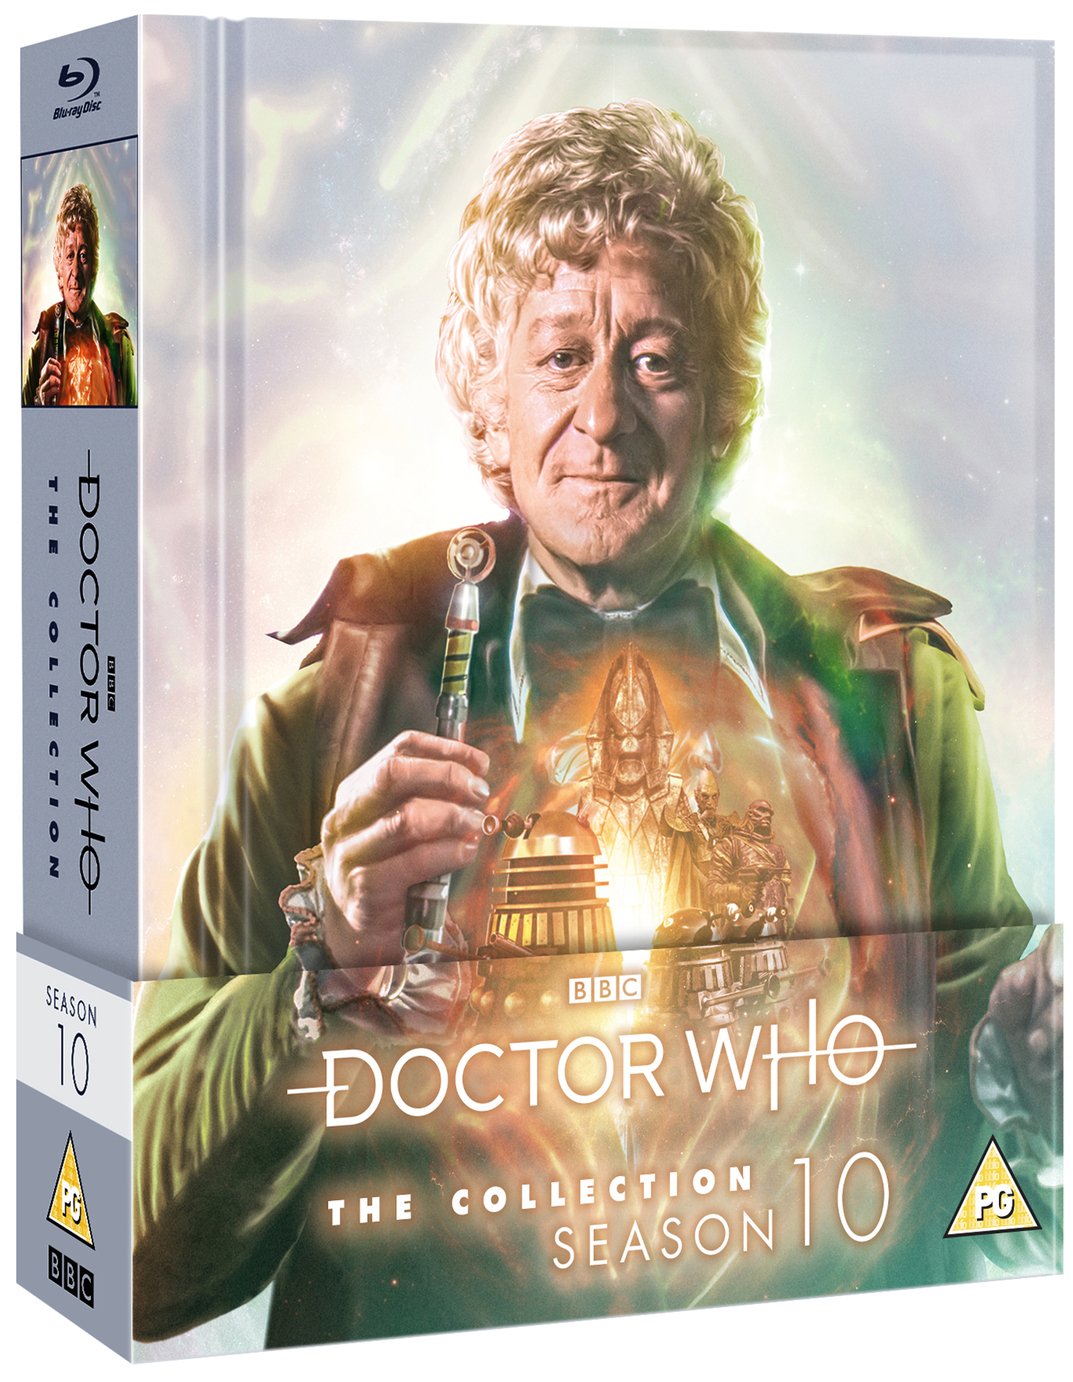 Doctor Who: The Collection Season 10 Blu-Ray Box Set